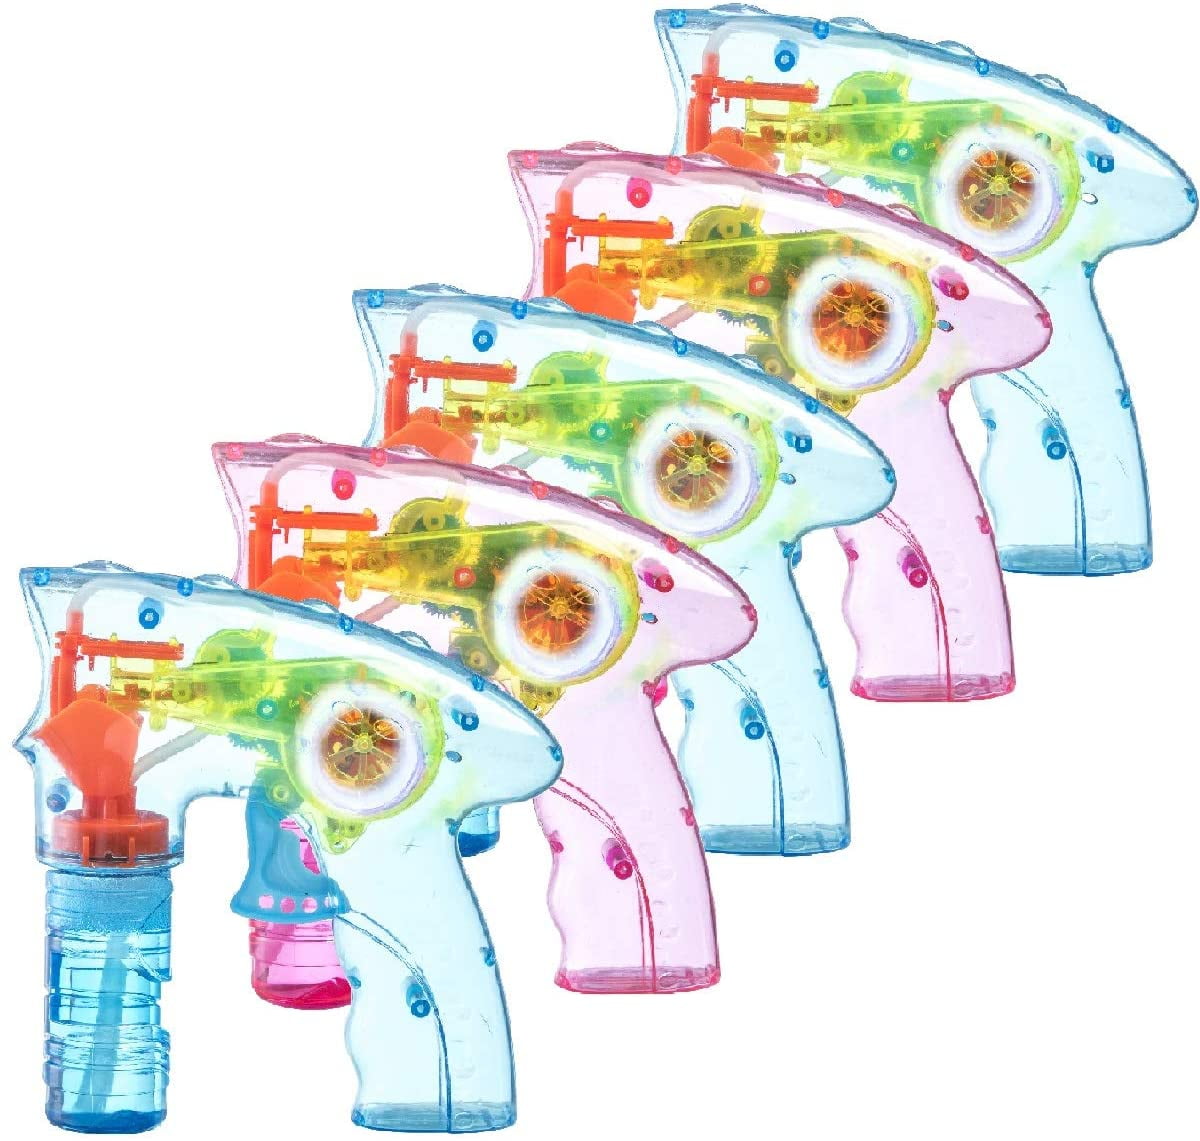 LIGHT UP DOG BUBBLE GUN WITH SOUND endless toy bottle bubbles maker machine NEW 